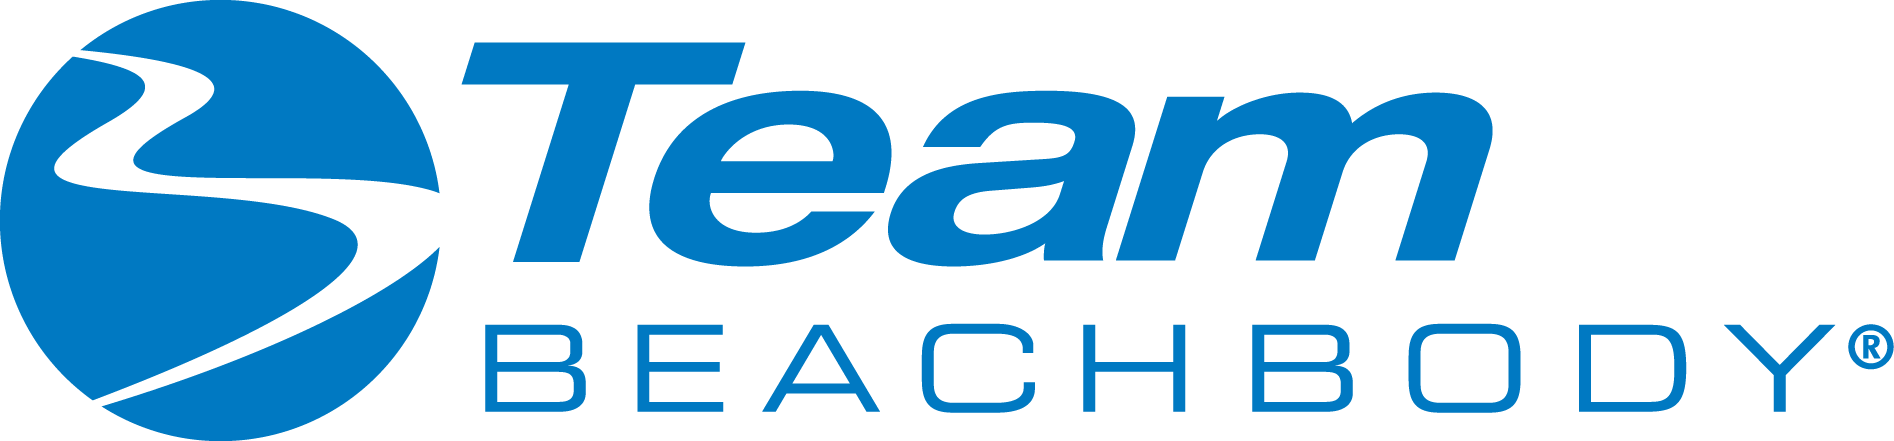 Beachbody Logos